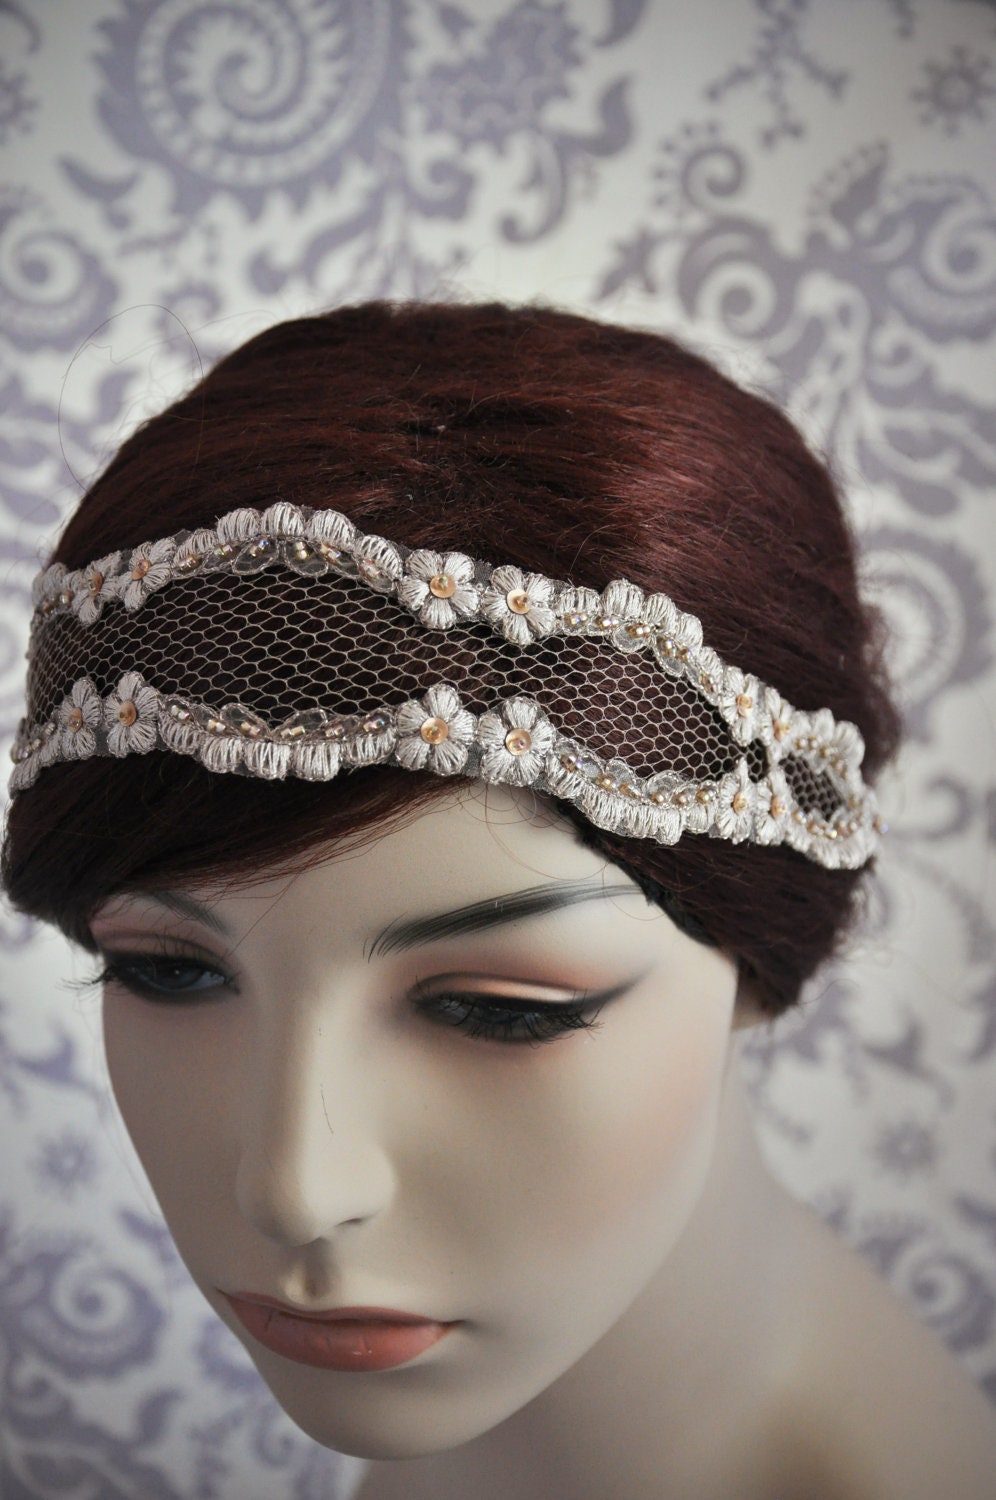 Champagne Bridal Headband, Boho Bridal accessories, Bohemian Headband, Champagne Lace Headband with Netting